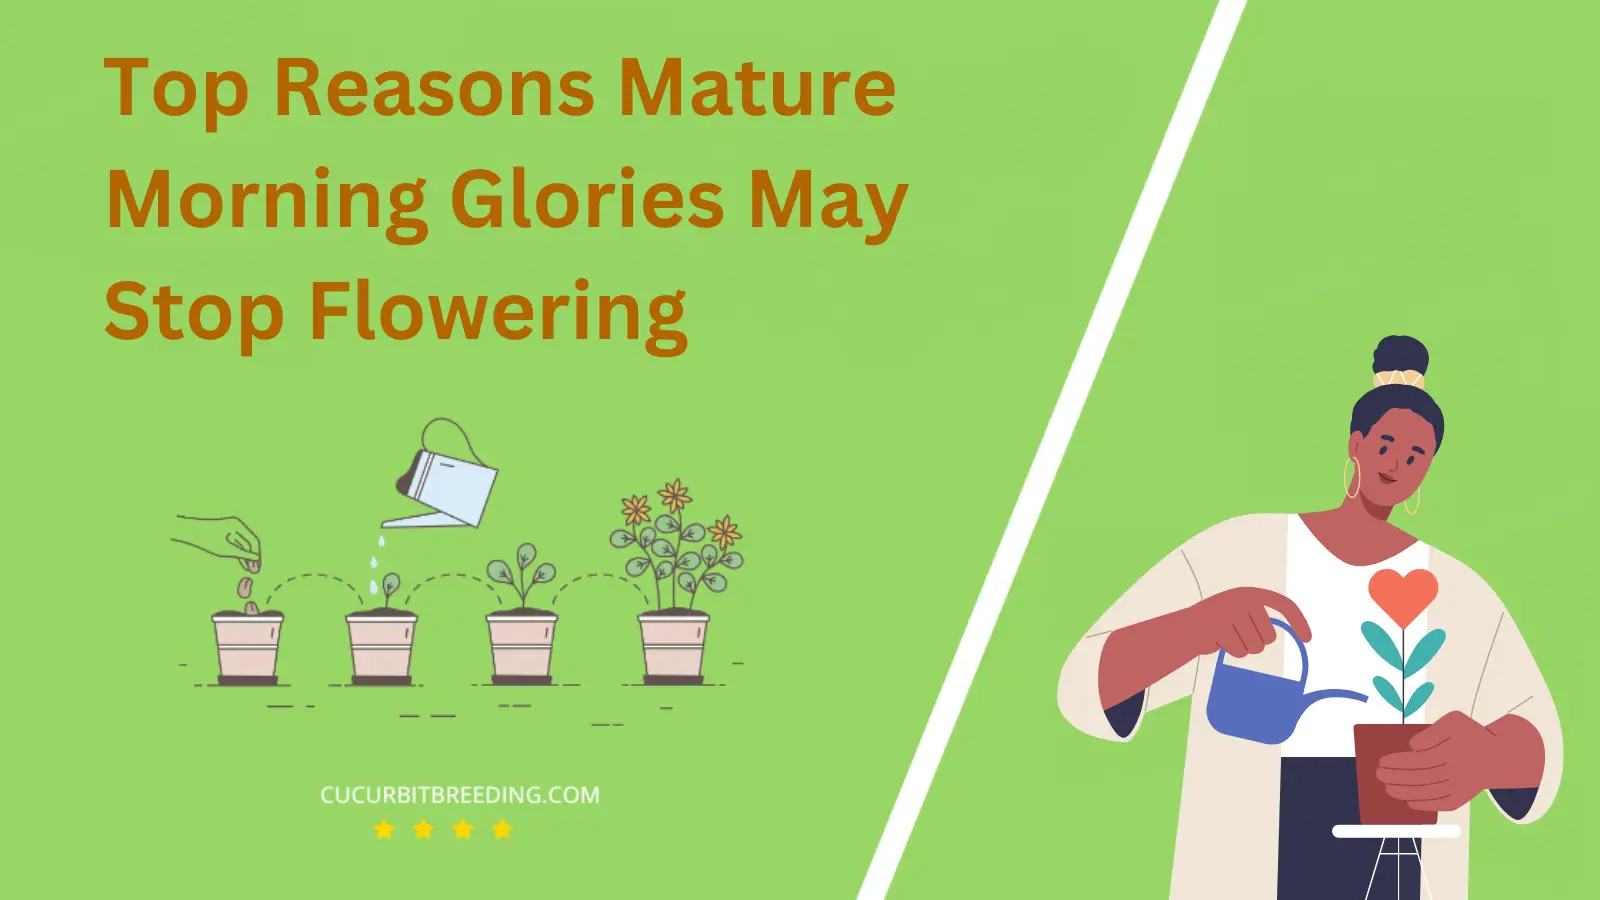 Top Reasons Mature Morning Glories May Stop Flowering